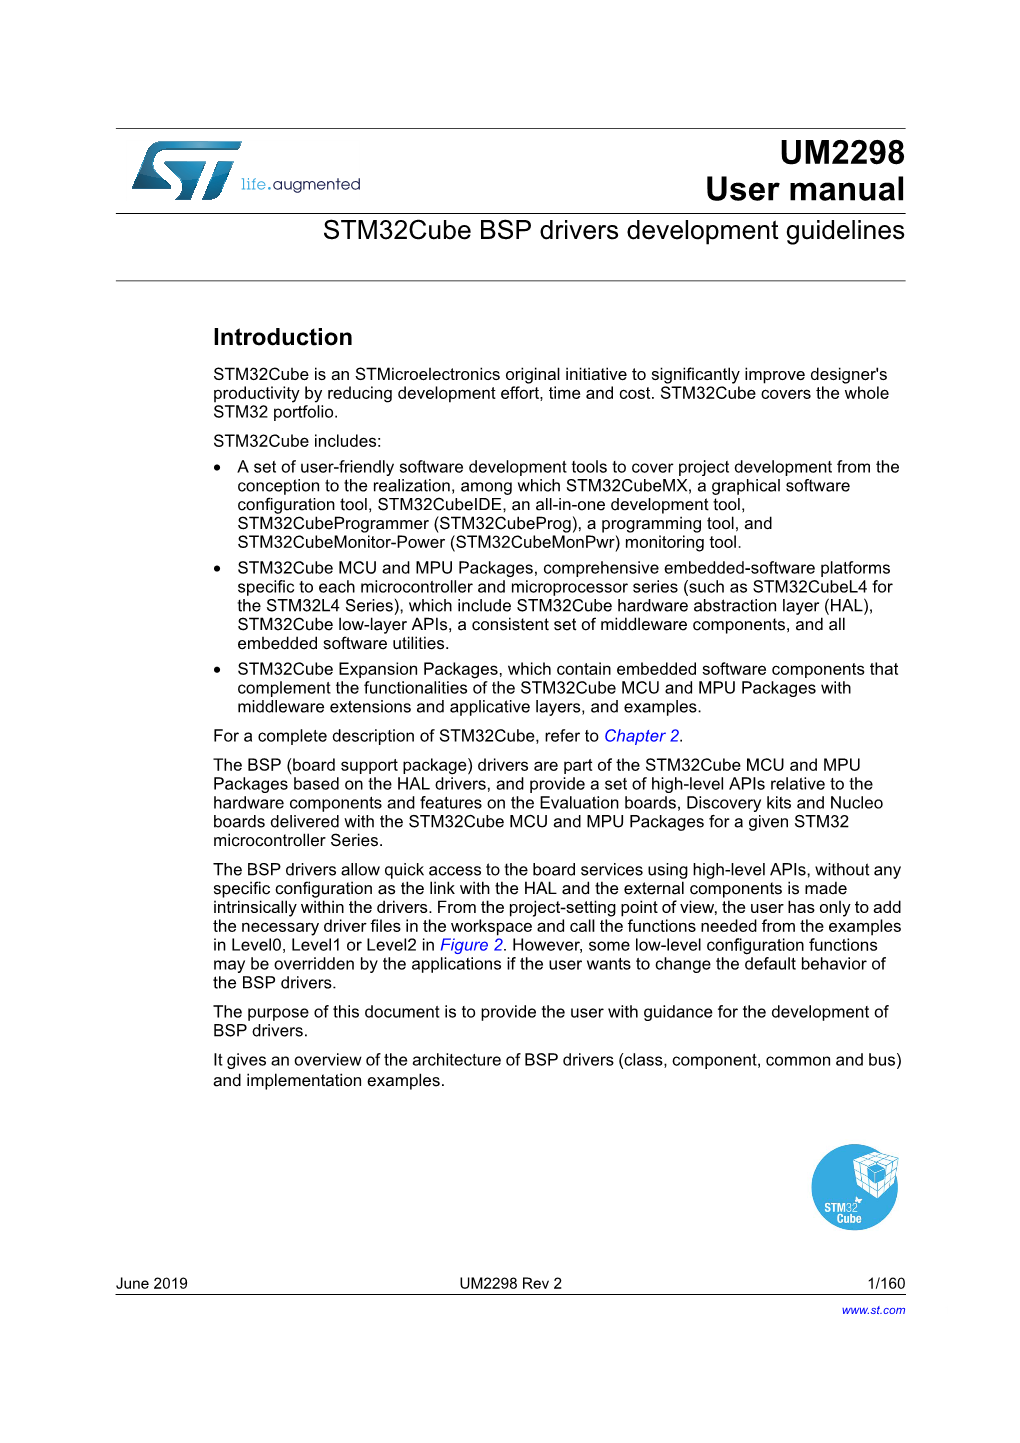 UM2298 User Manual: Stm32cube BSP Drivers Development Guidelines